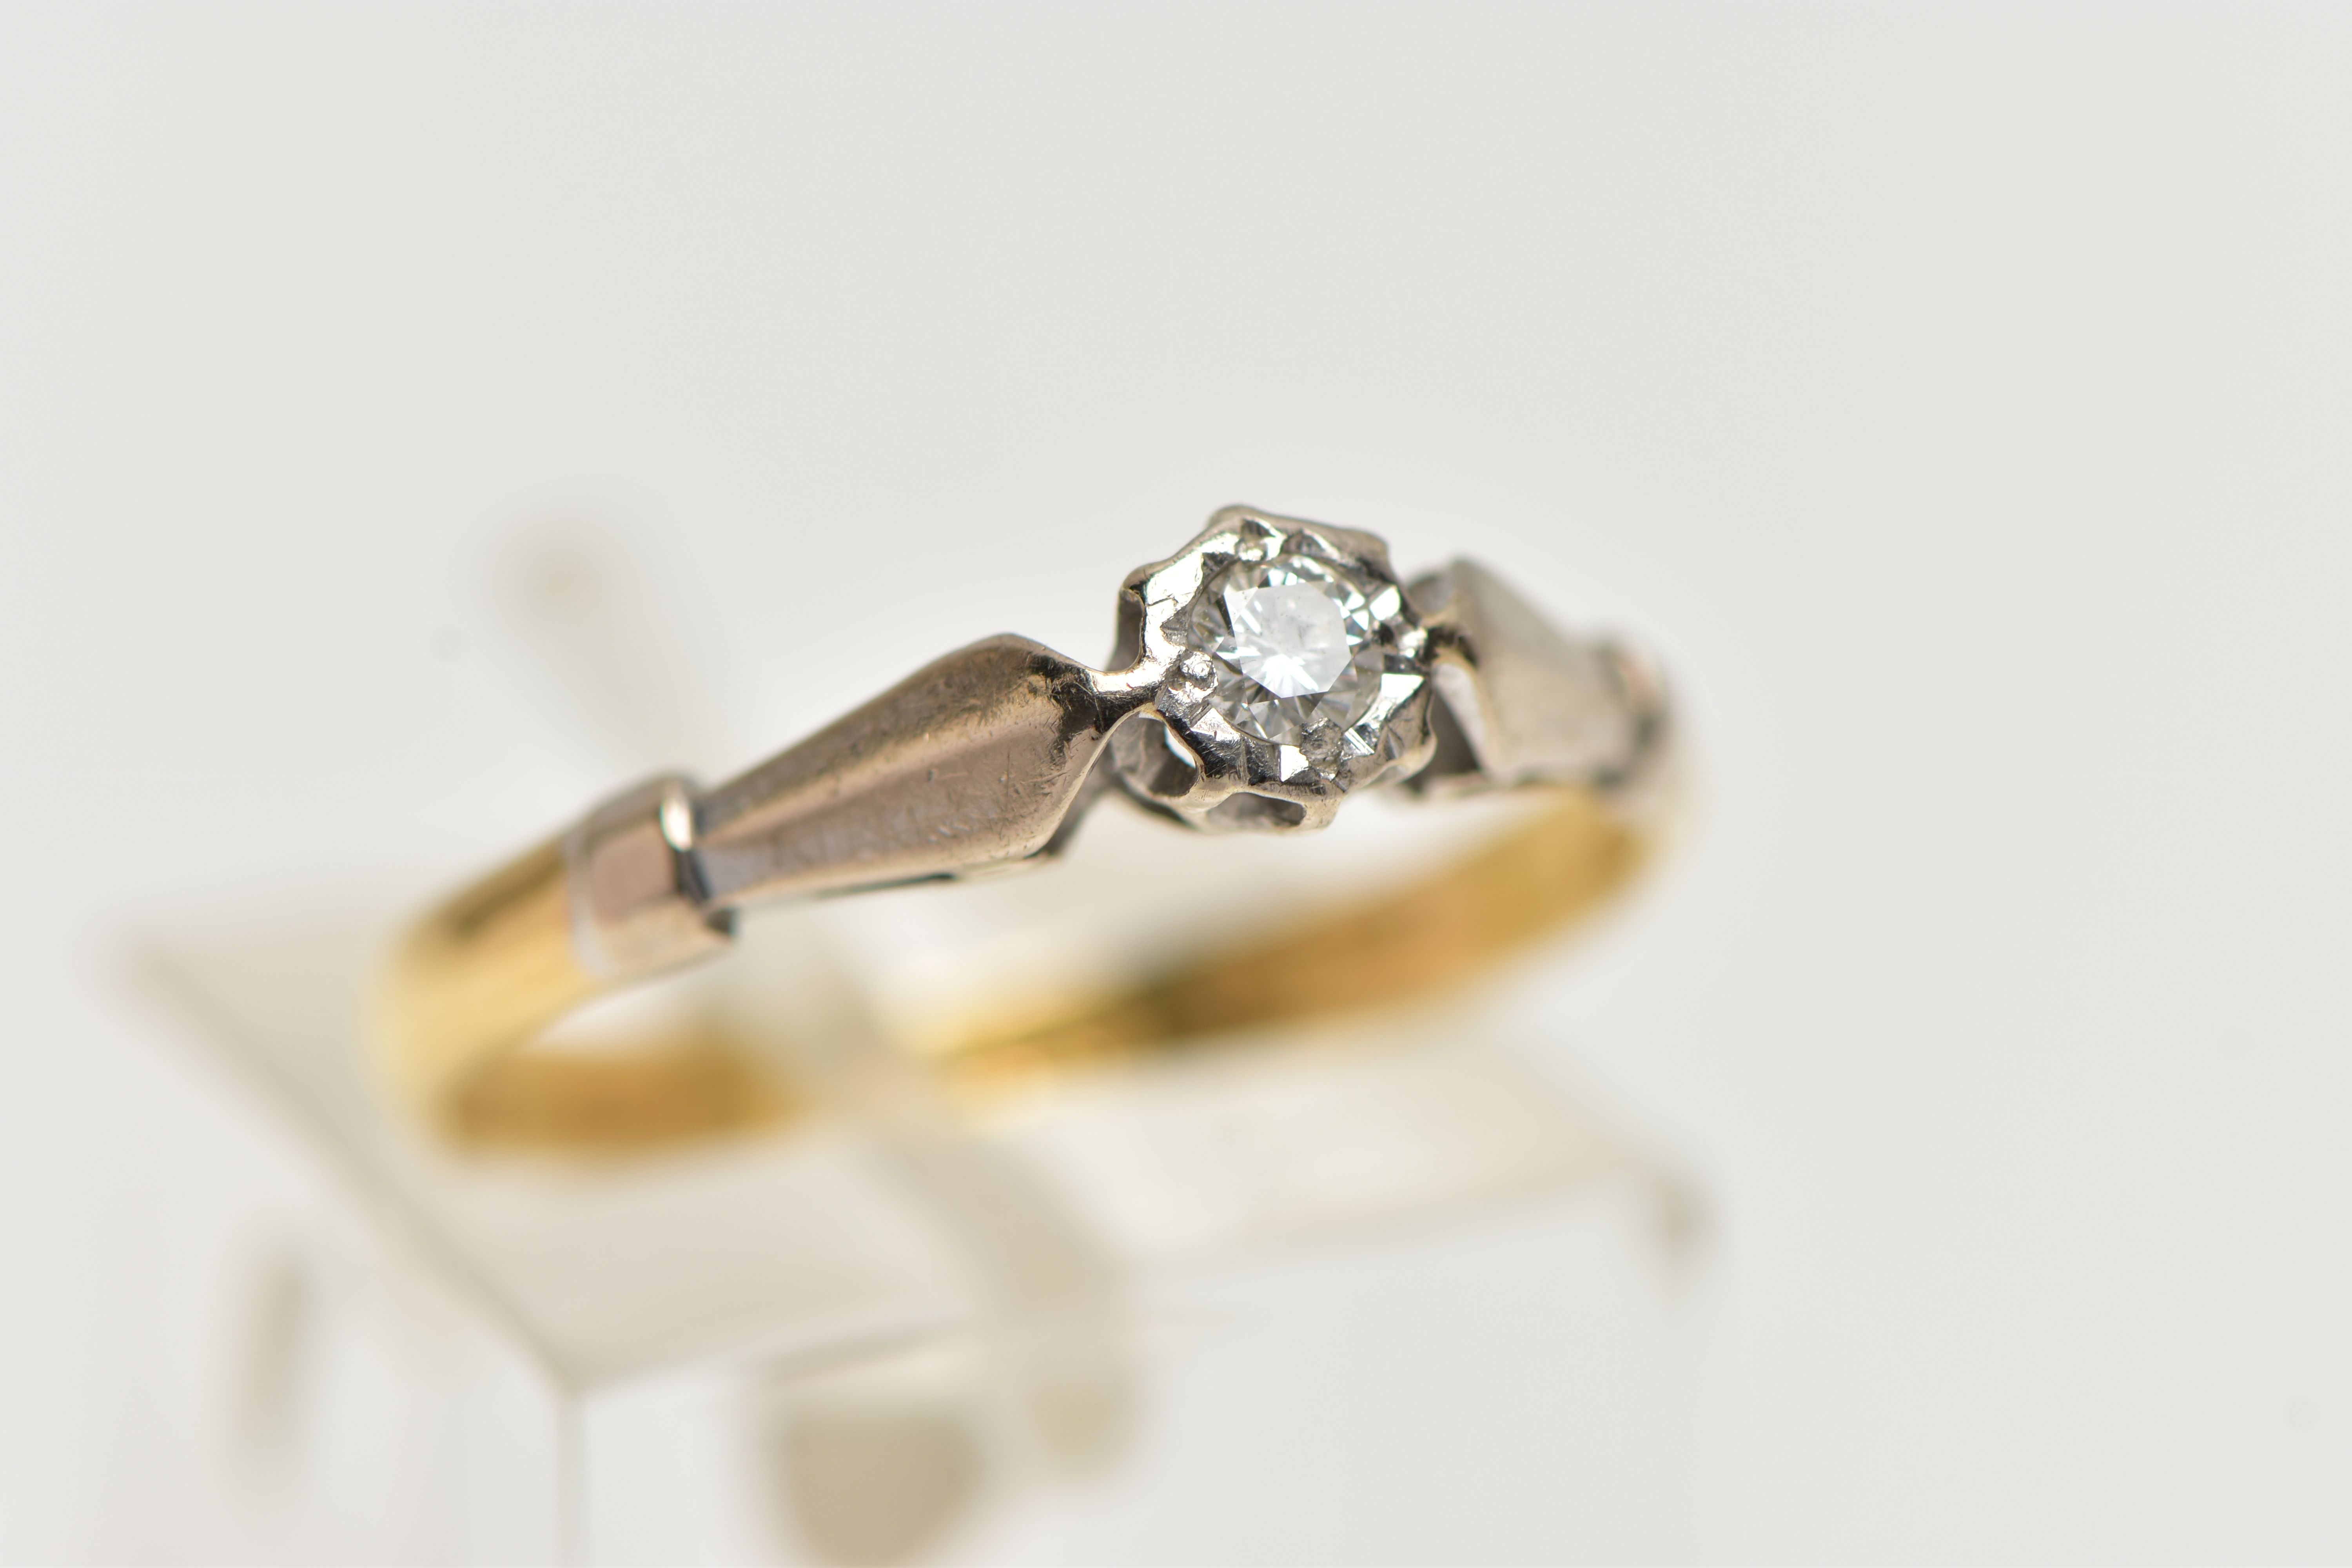 AN 18CT GOLD, SINGLE STONE DIAMOND RING, a round brilliant cut diamond set in a white metal illusion - Image 4 of 4